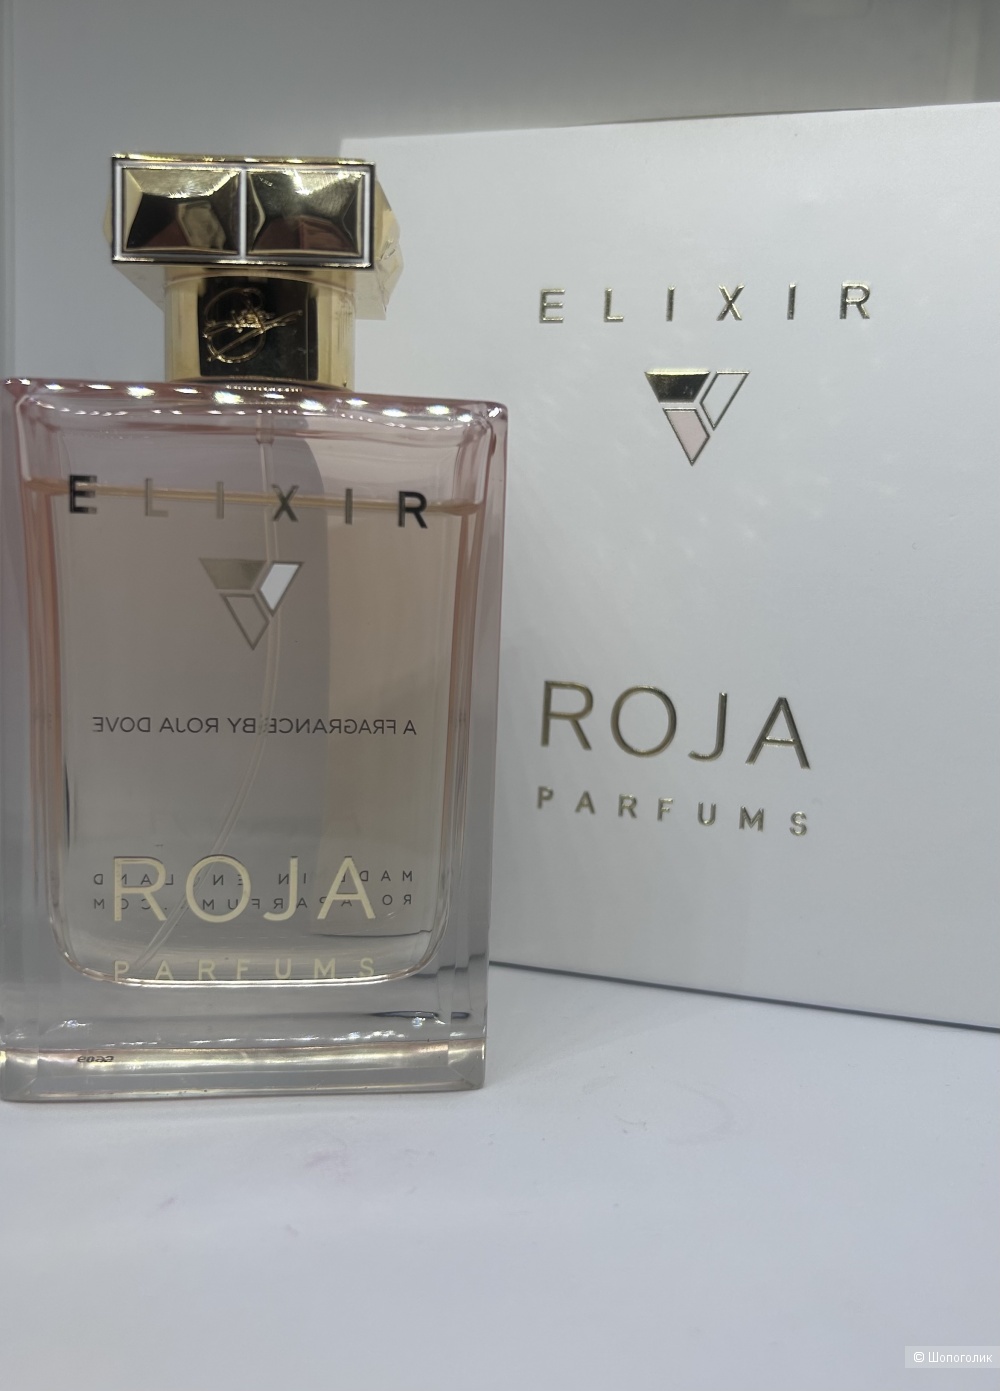 Roja Parfums Elixir essence de parfum ,85мл